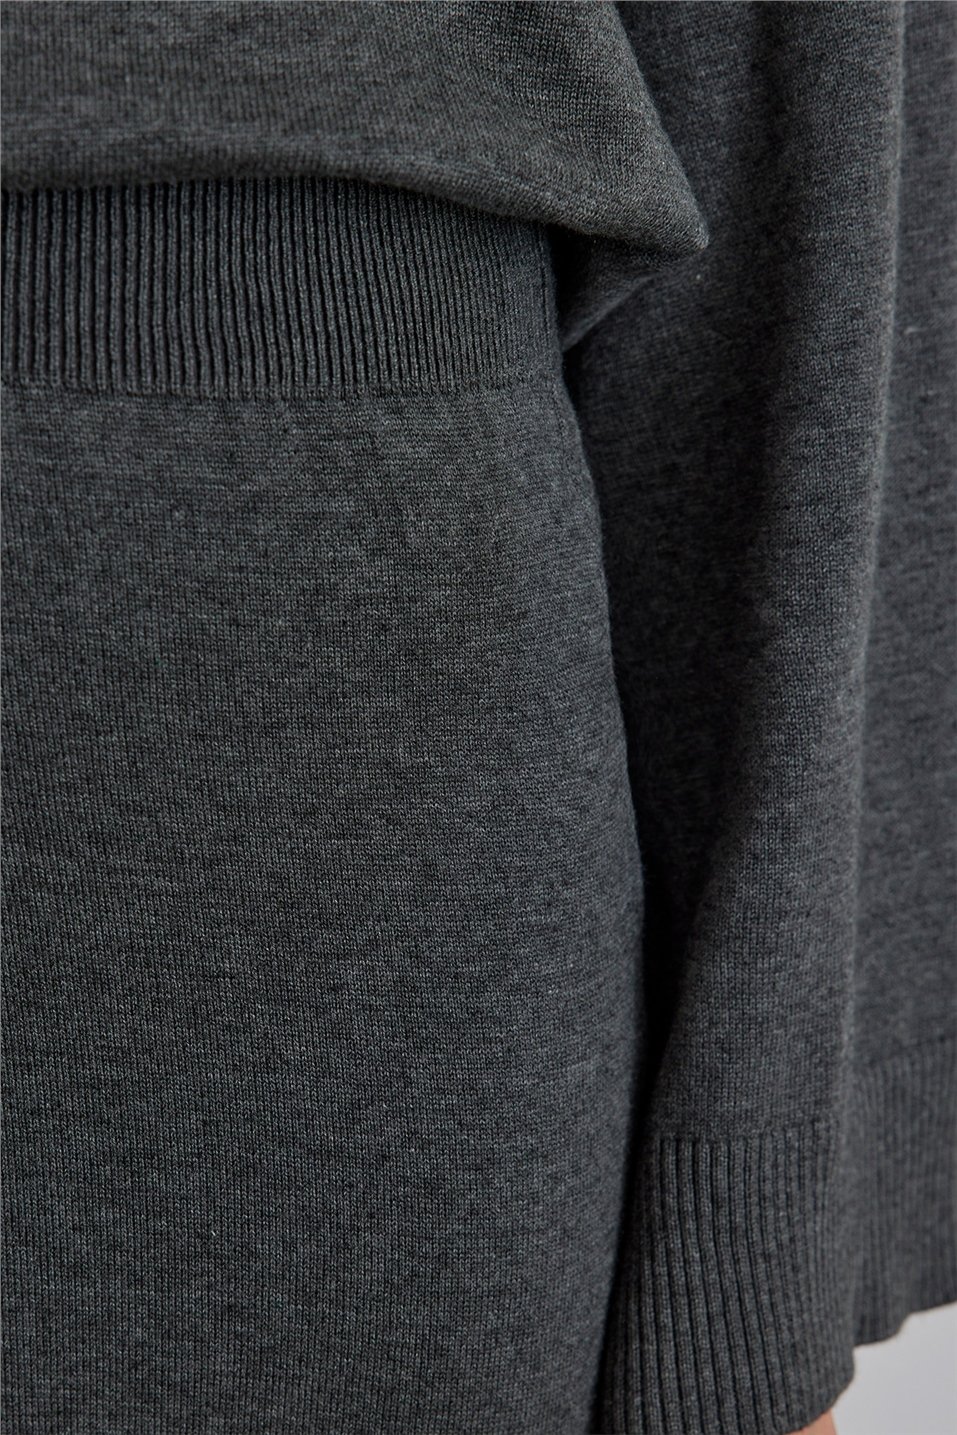 Grey Knitwear Pencil Skirt